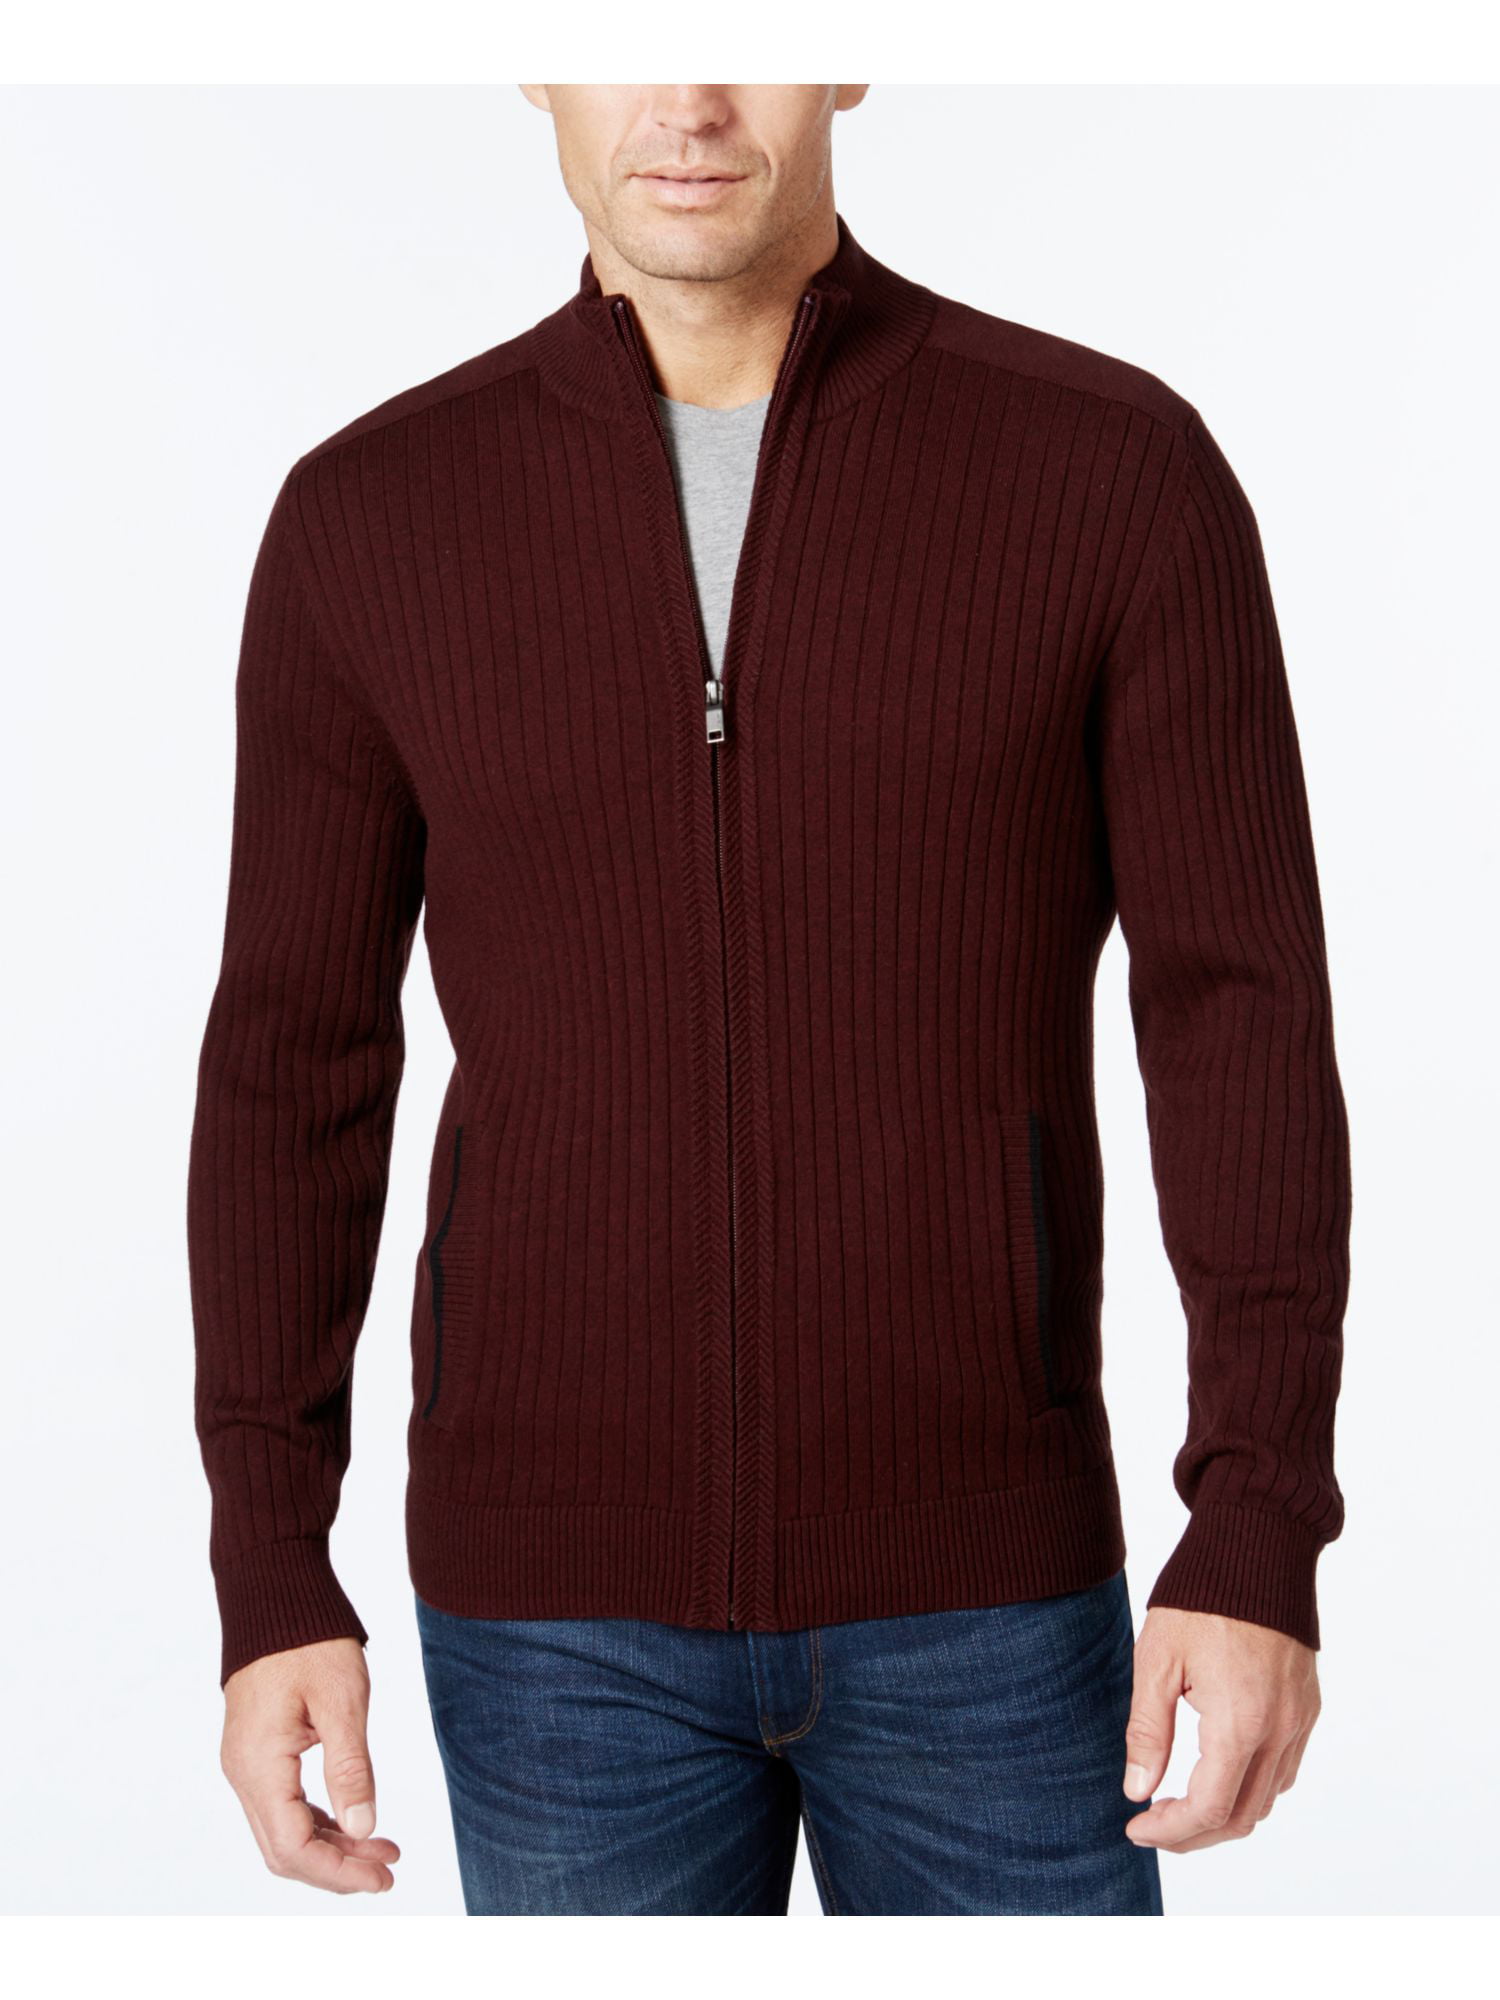 Alfani Men's Sweater Heather Gray Size XL Pullover Wool Crewneck $85 #080 